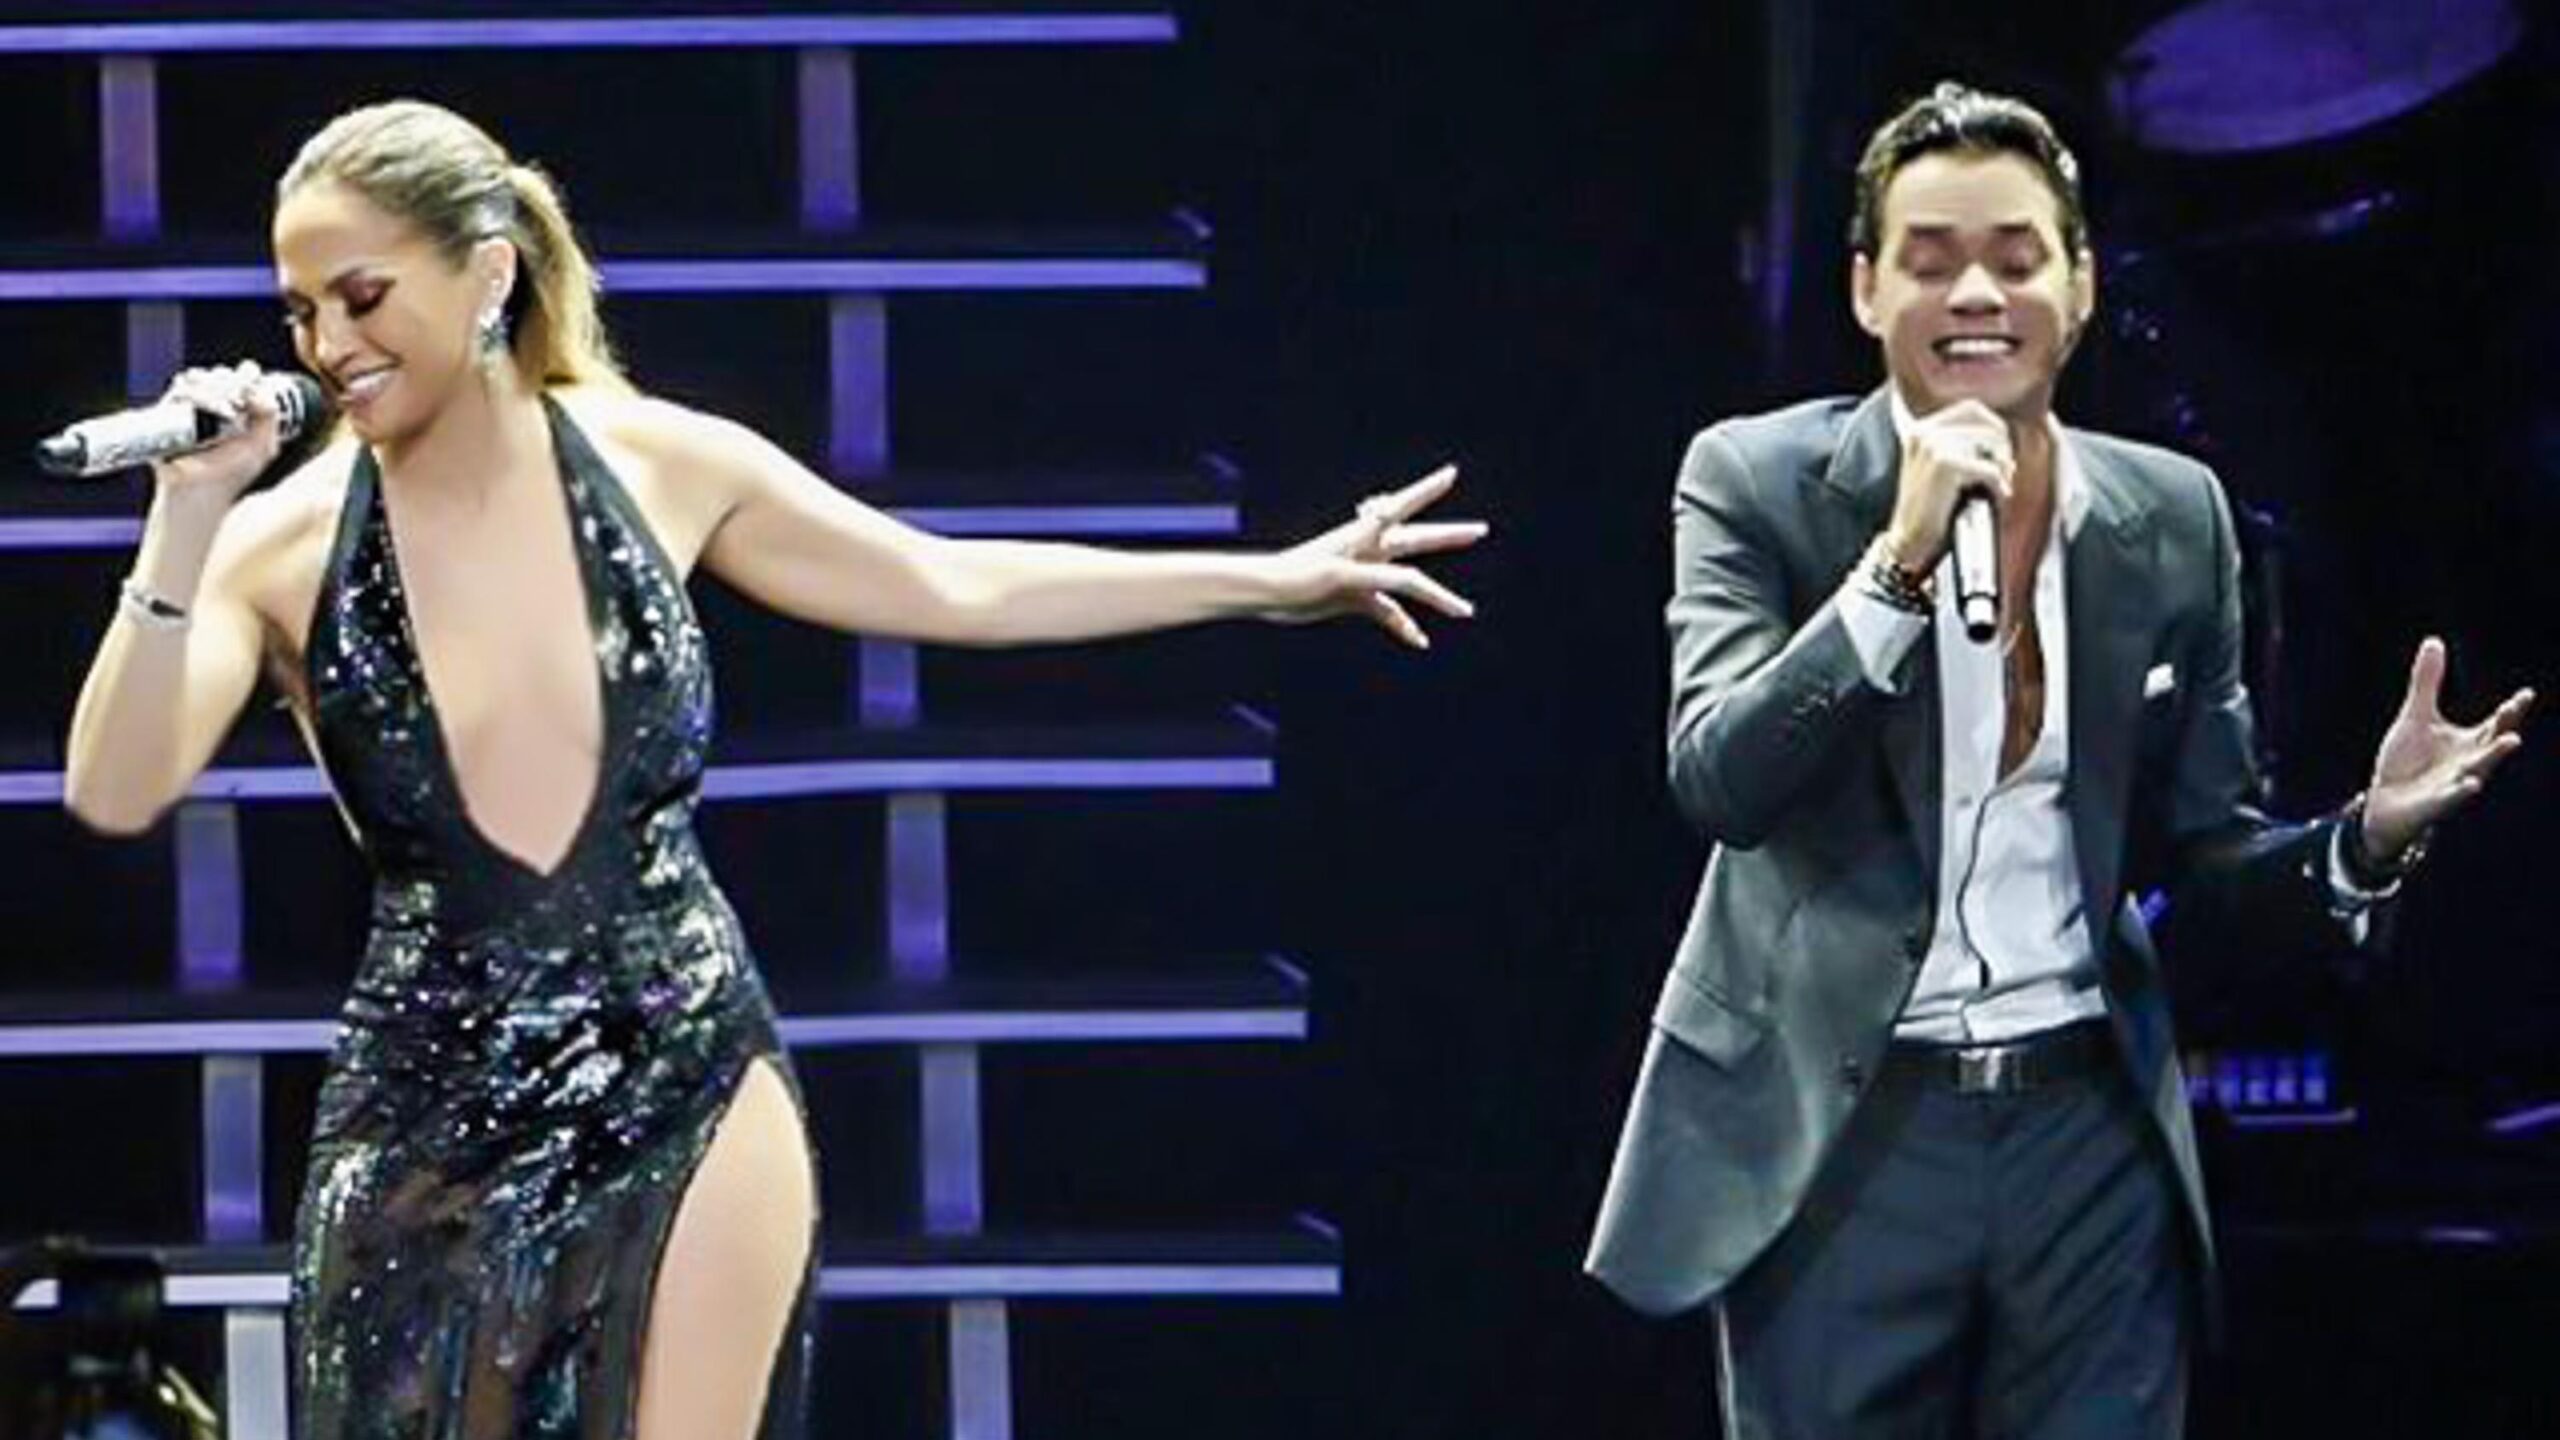 WATCH: Exes Jennifer Lopez, Marc Anthony reunite onstage